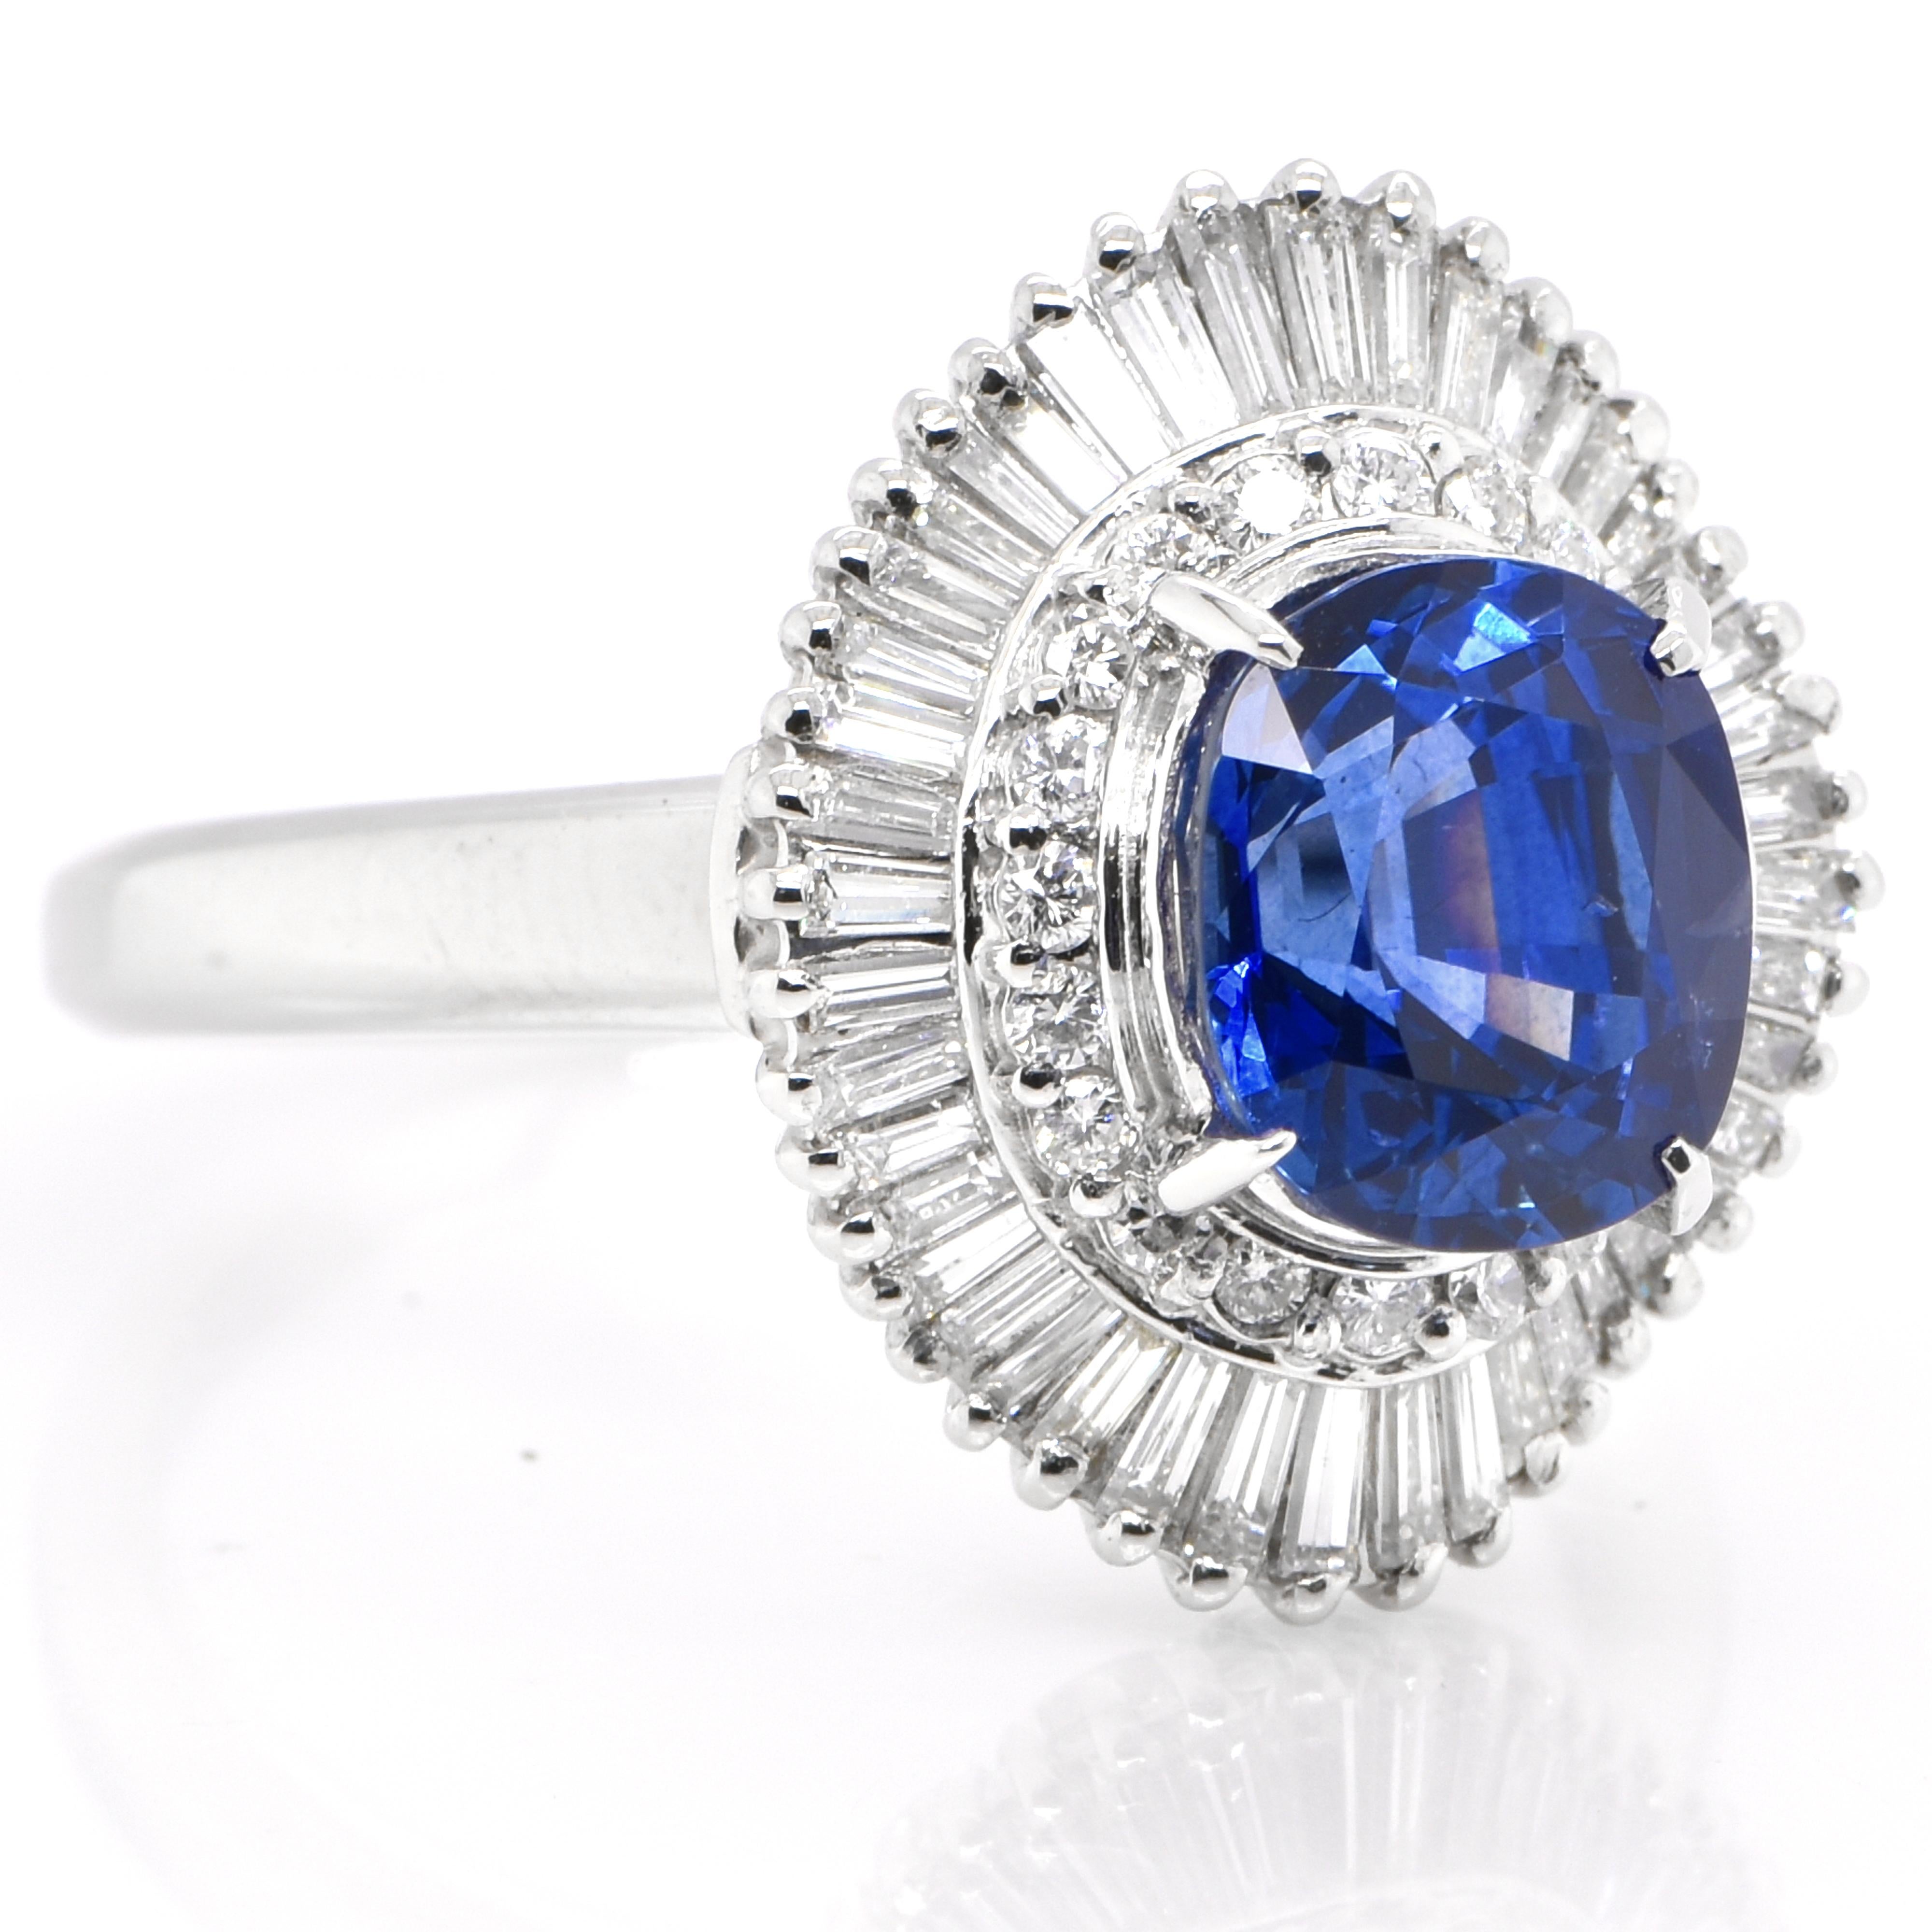 Modern 3.04 Carat Natural Blue Sapphire and Diamond Ballerina Ring Set in Platinum